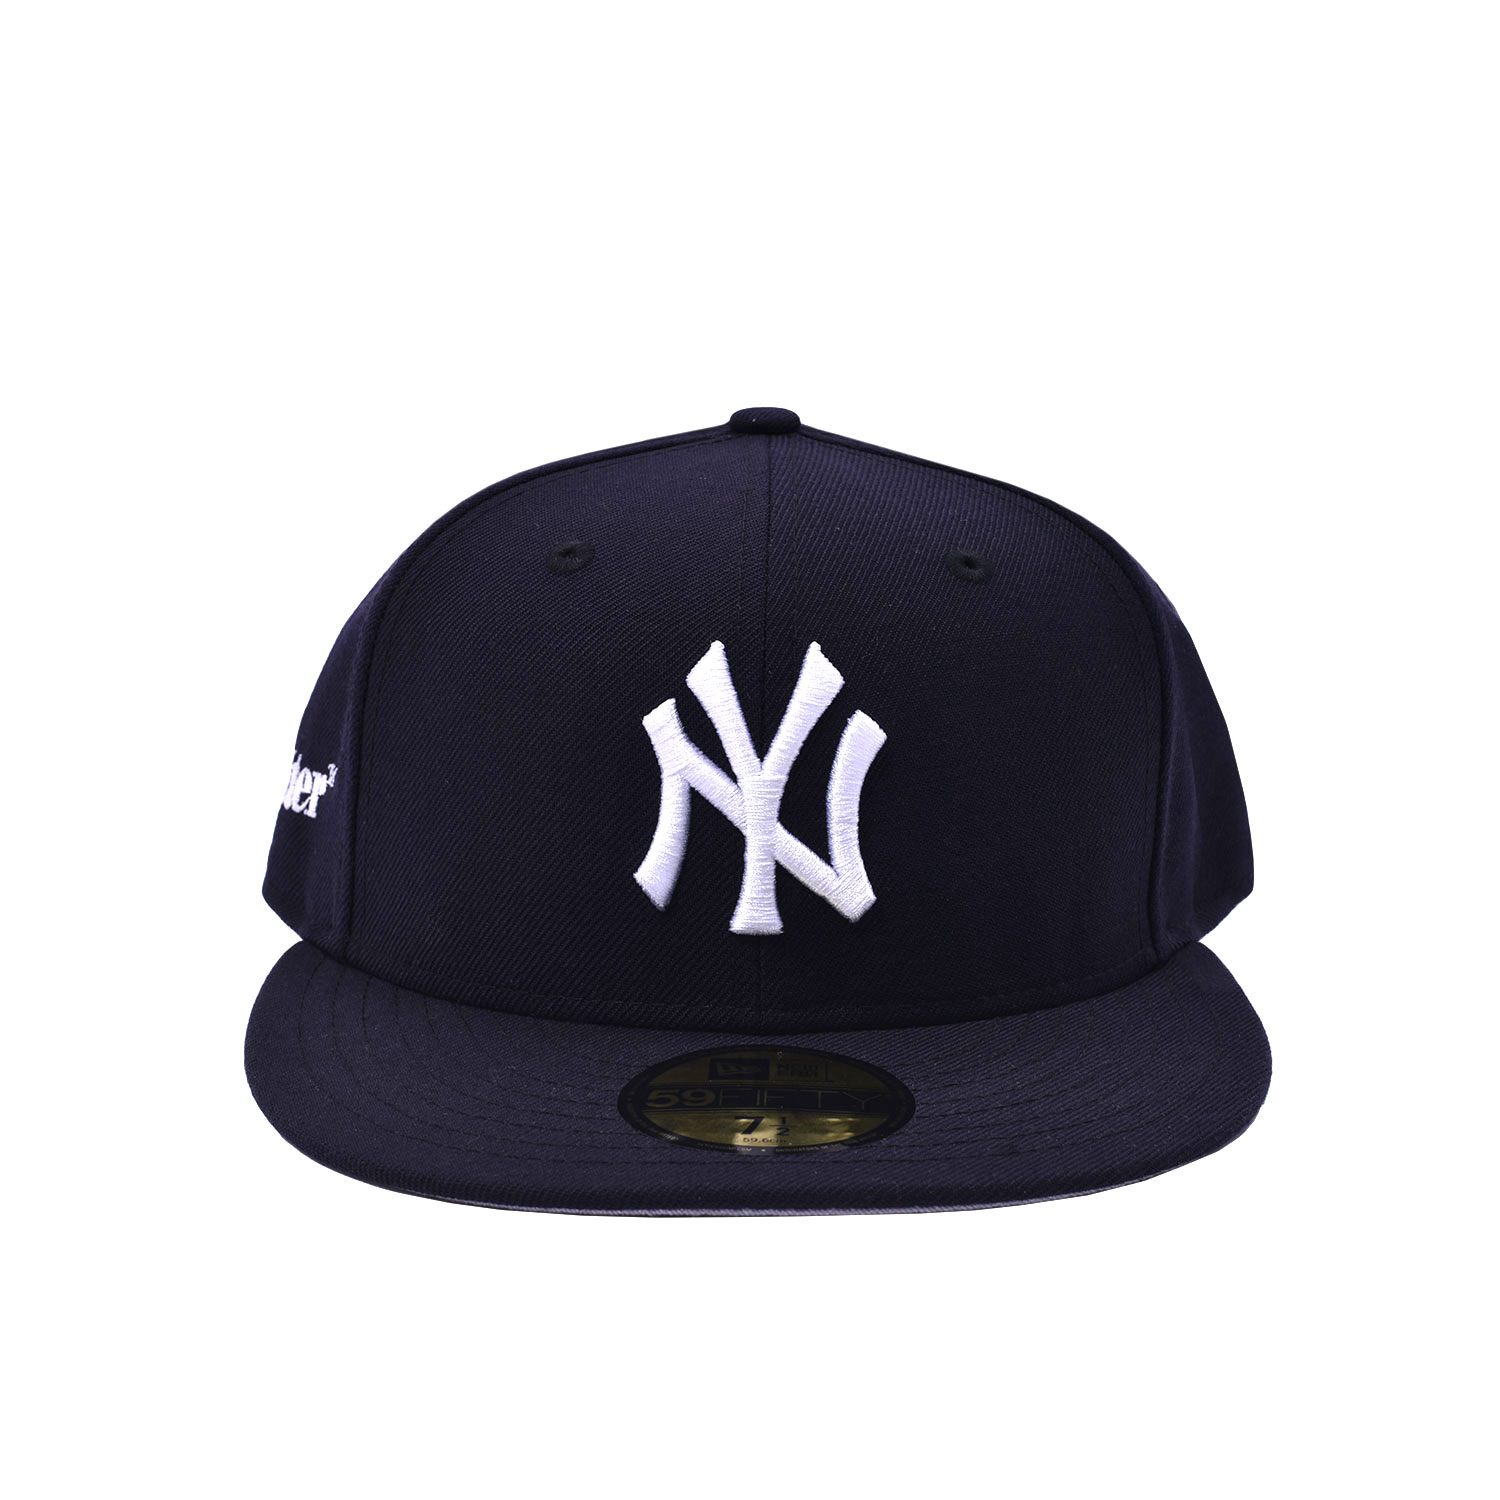 zo Madison voorstel Better New Era New York Yankees Cap | FIRMAMENT - Berlin Renaissance